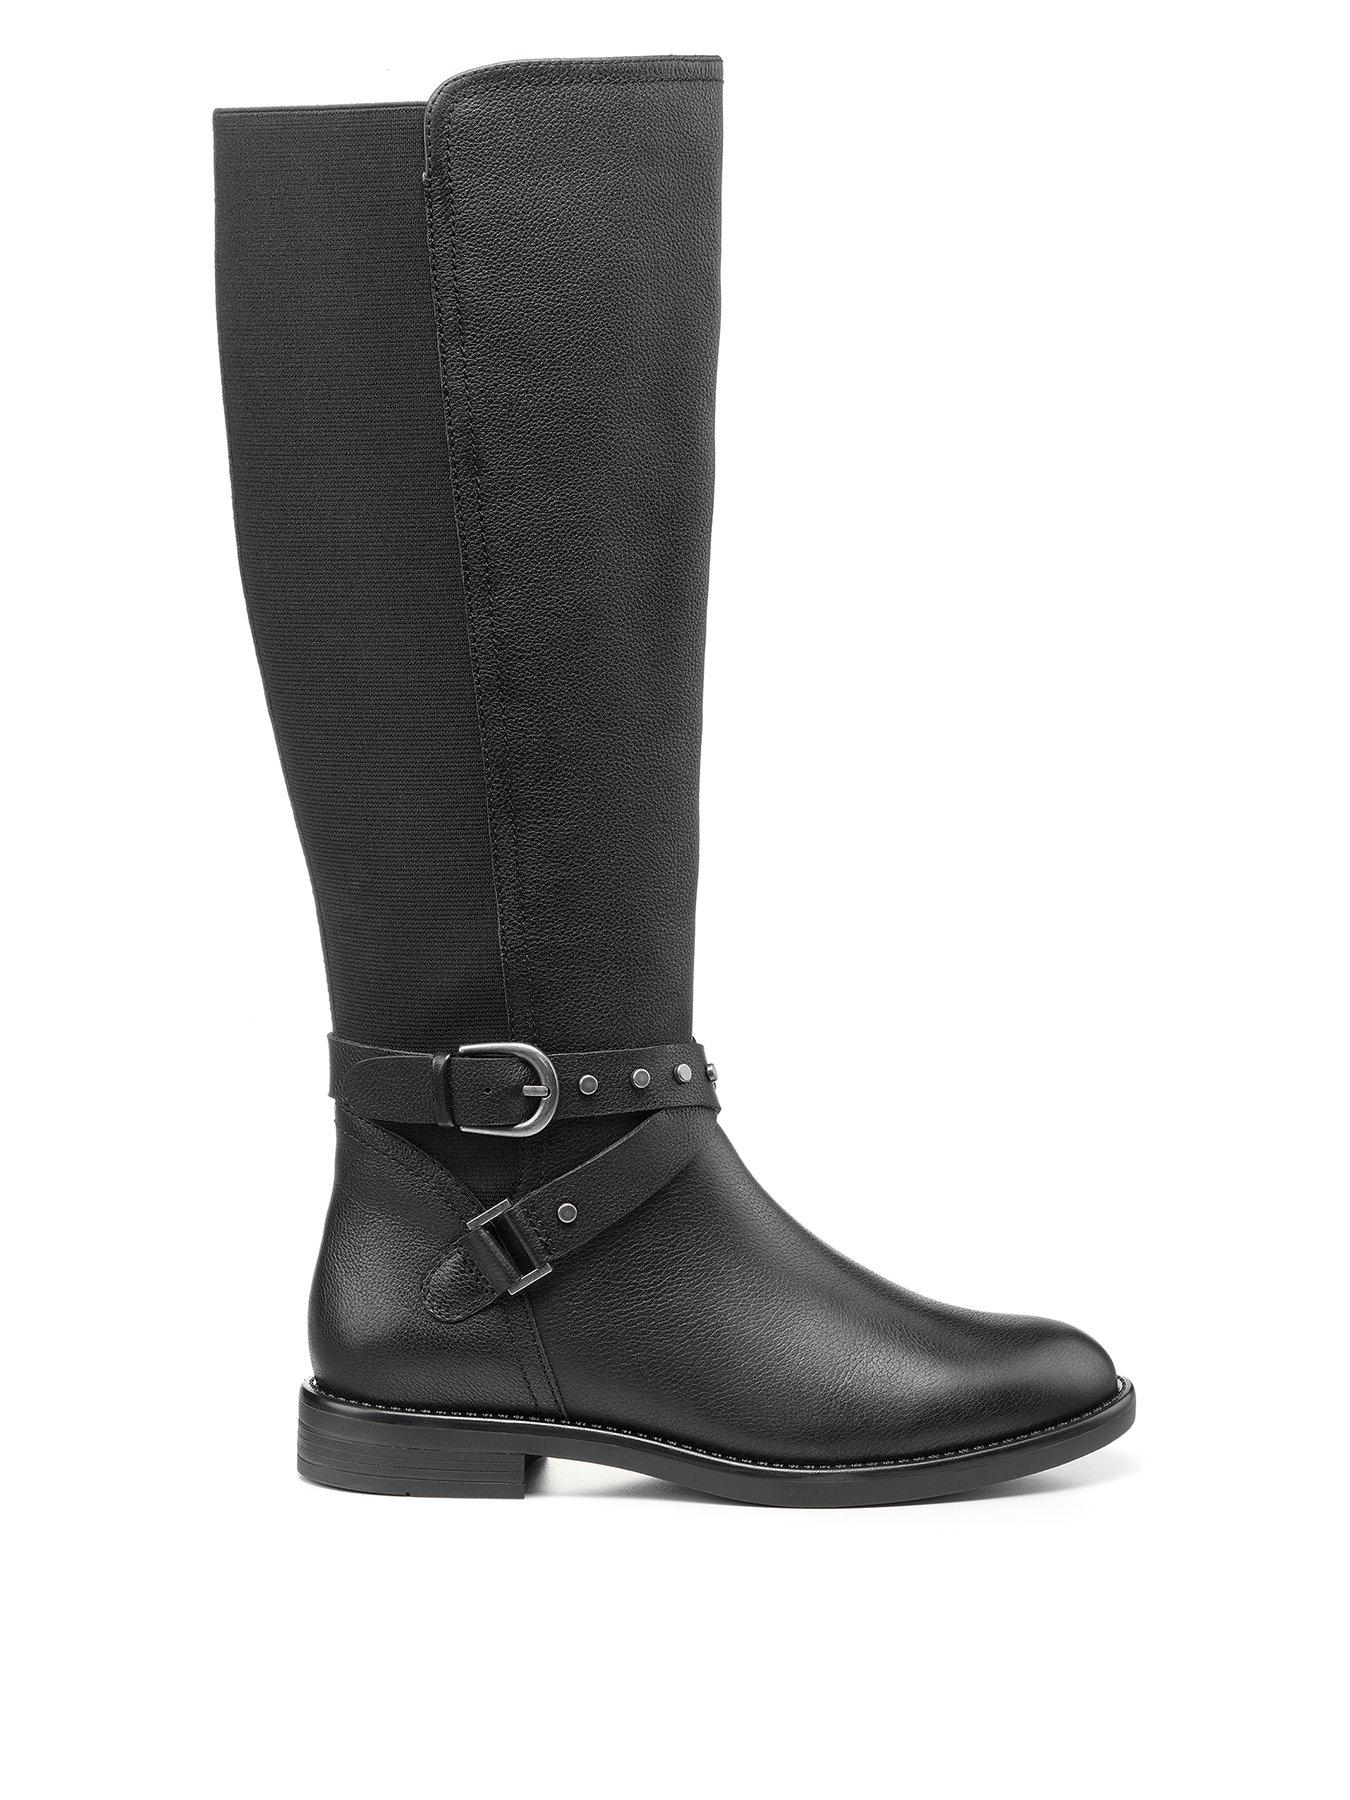 Barbour Designer Black Buckle Lace Up Ankle Boots